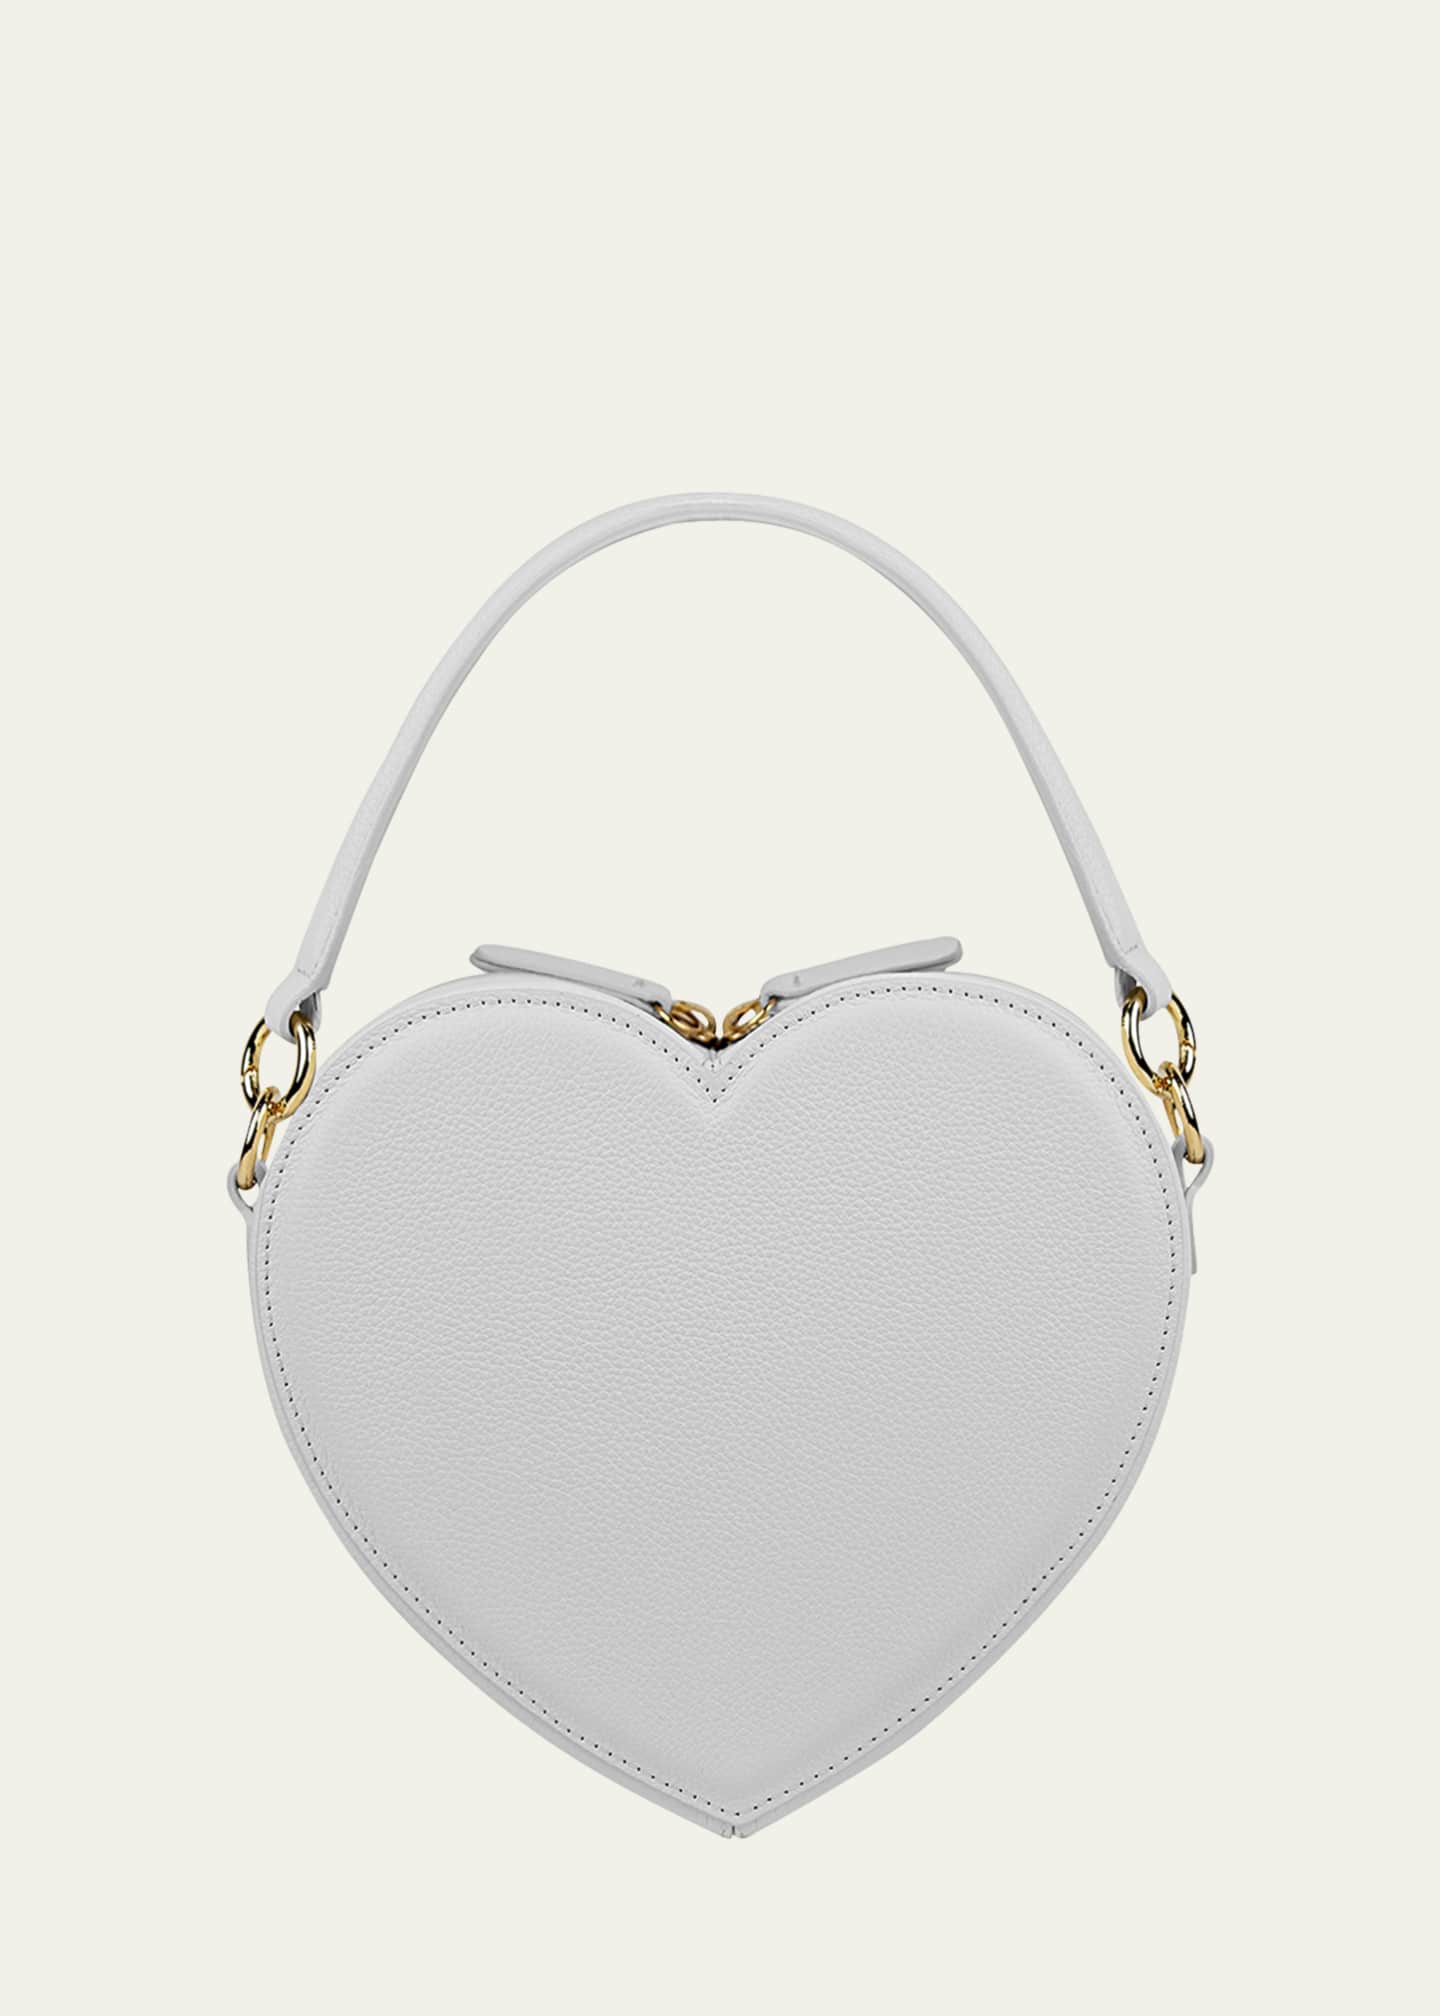 Heart shaped Kate Spade bag.  Kate spade bag, Kate spade purse